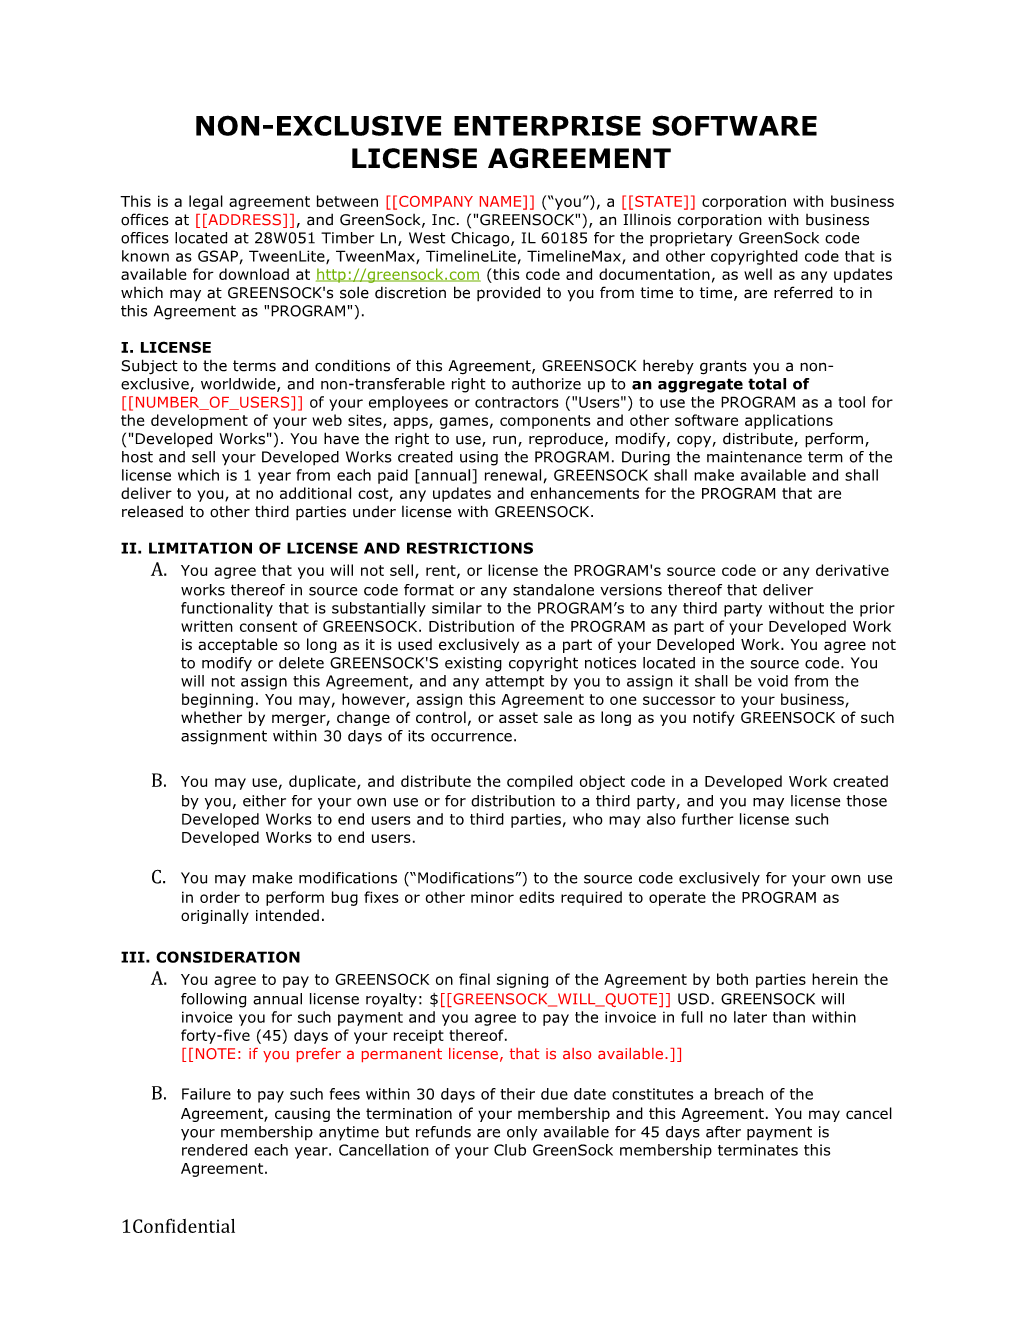 Non-Exclusive Enterprise Software License Agreement